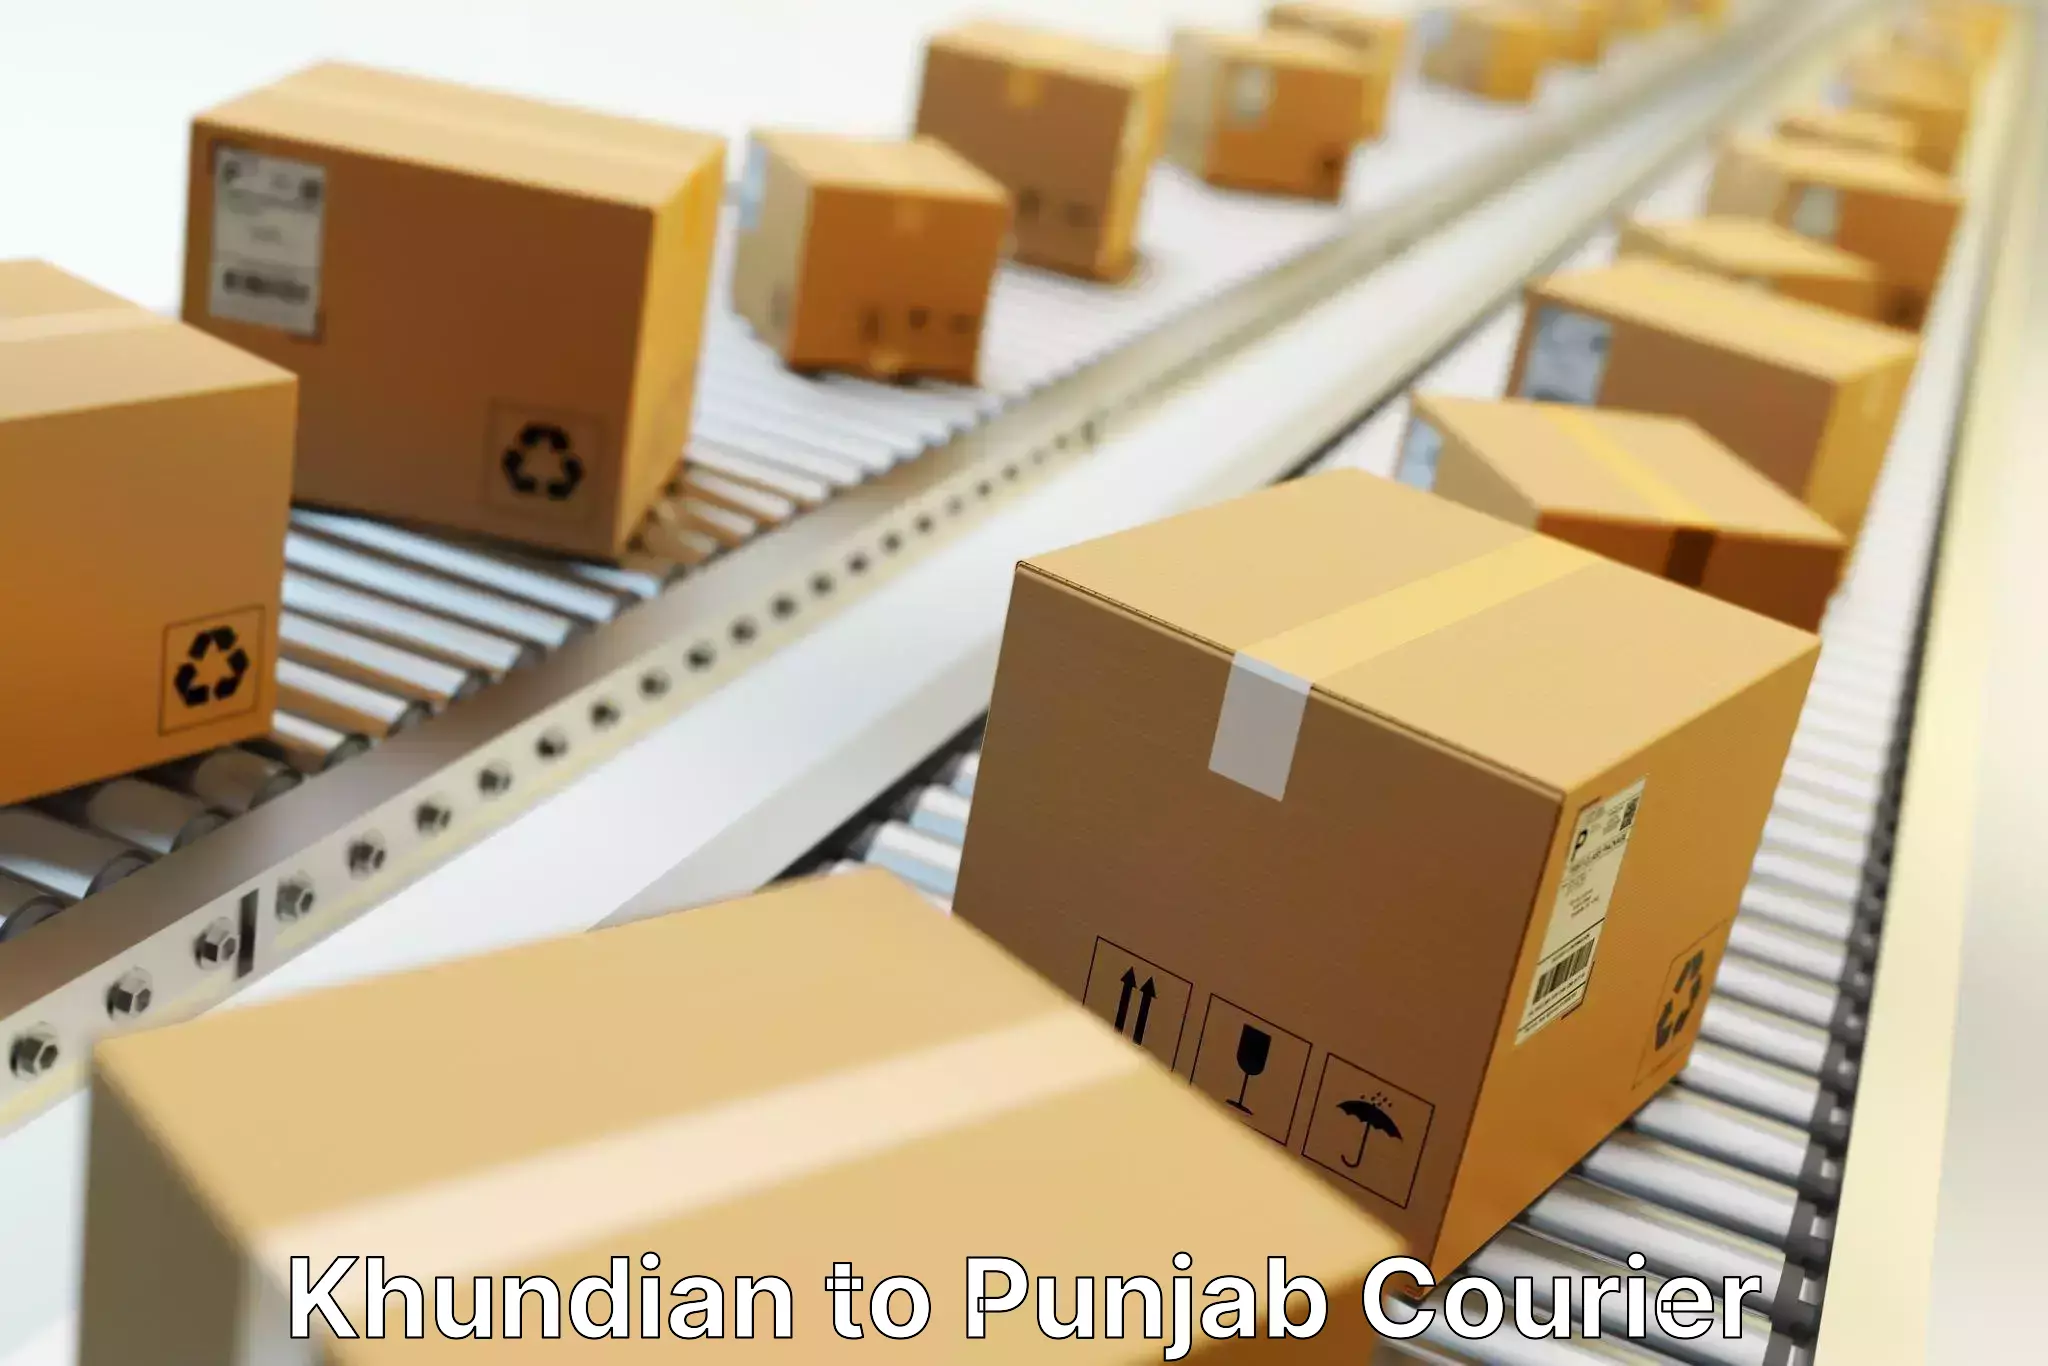 Easy return solutions Khundian to Punjab